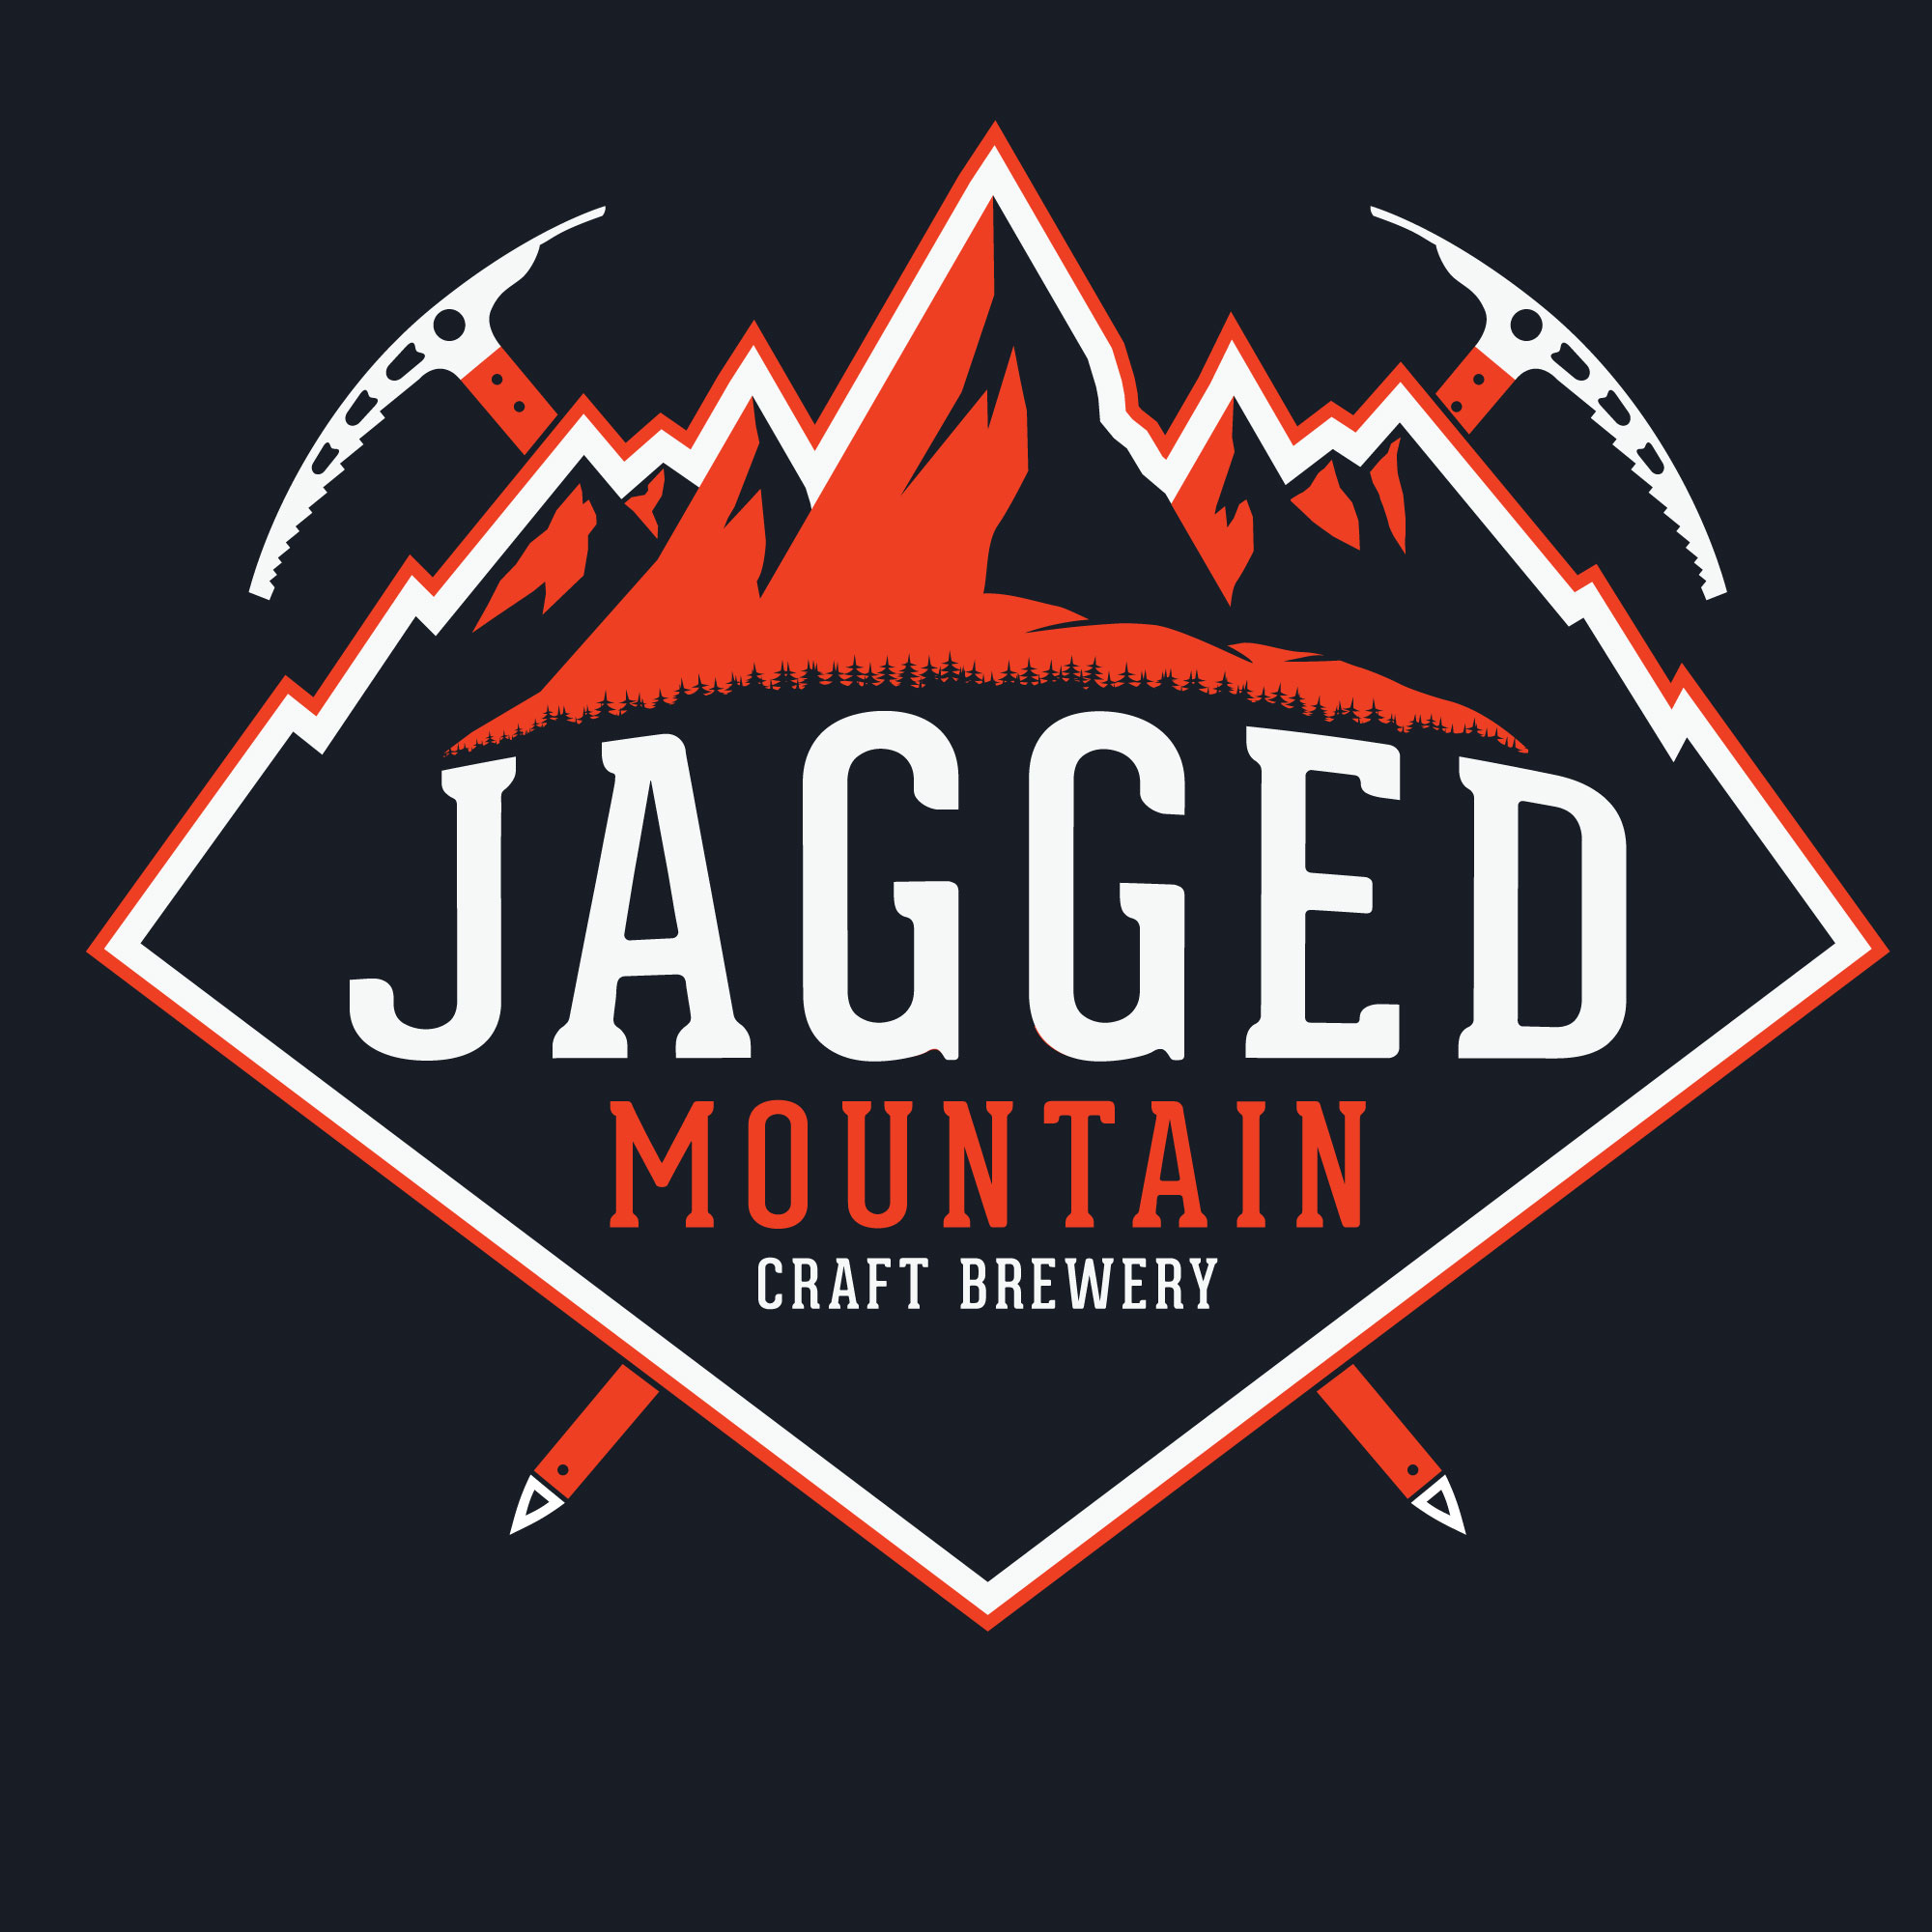 Jagged Mountain Craft Brewery jobs